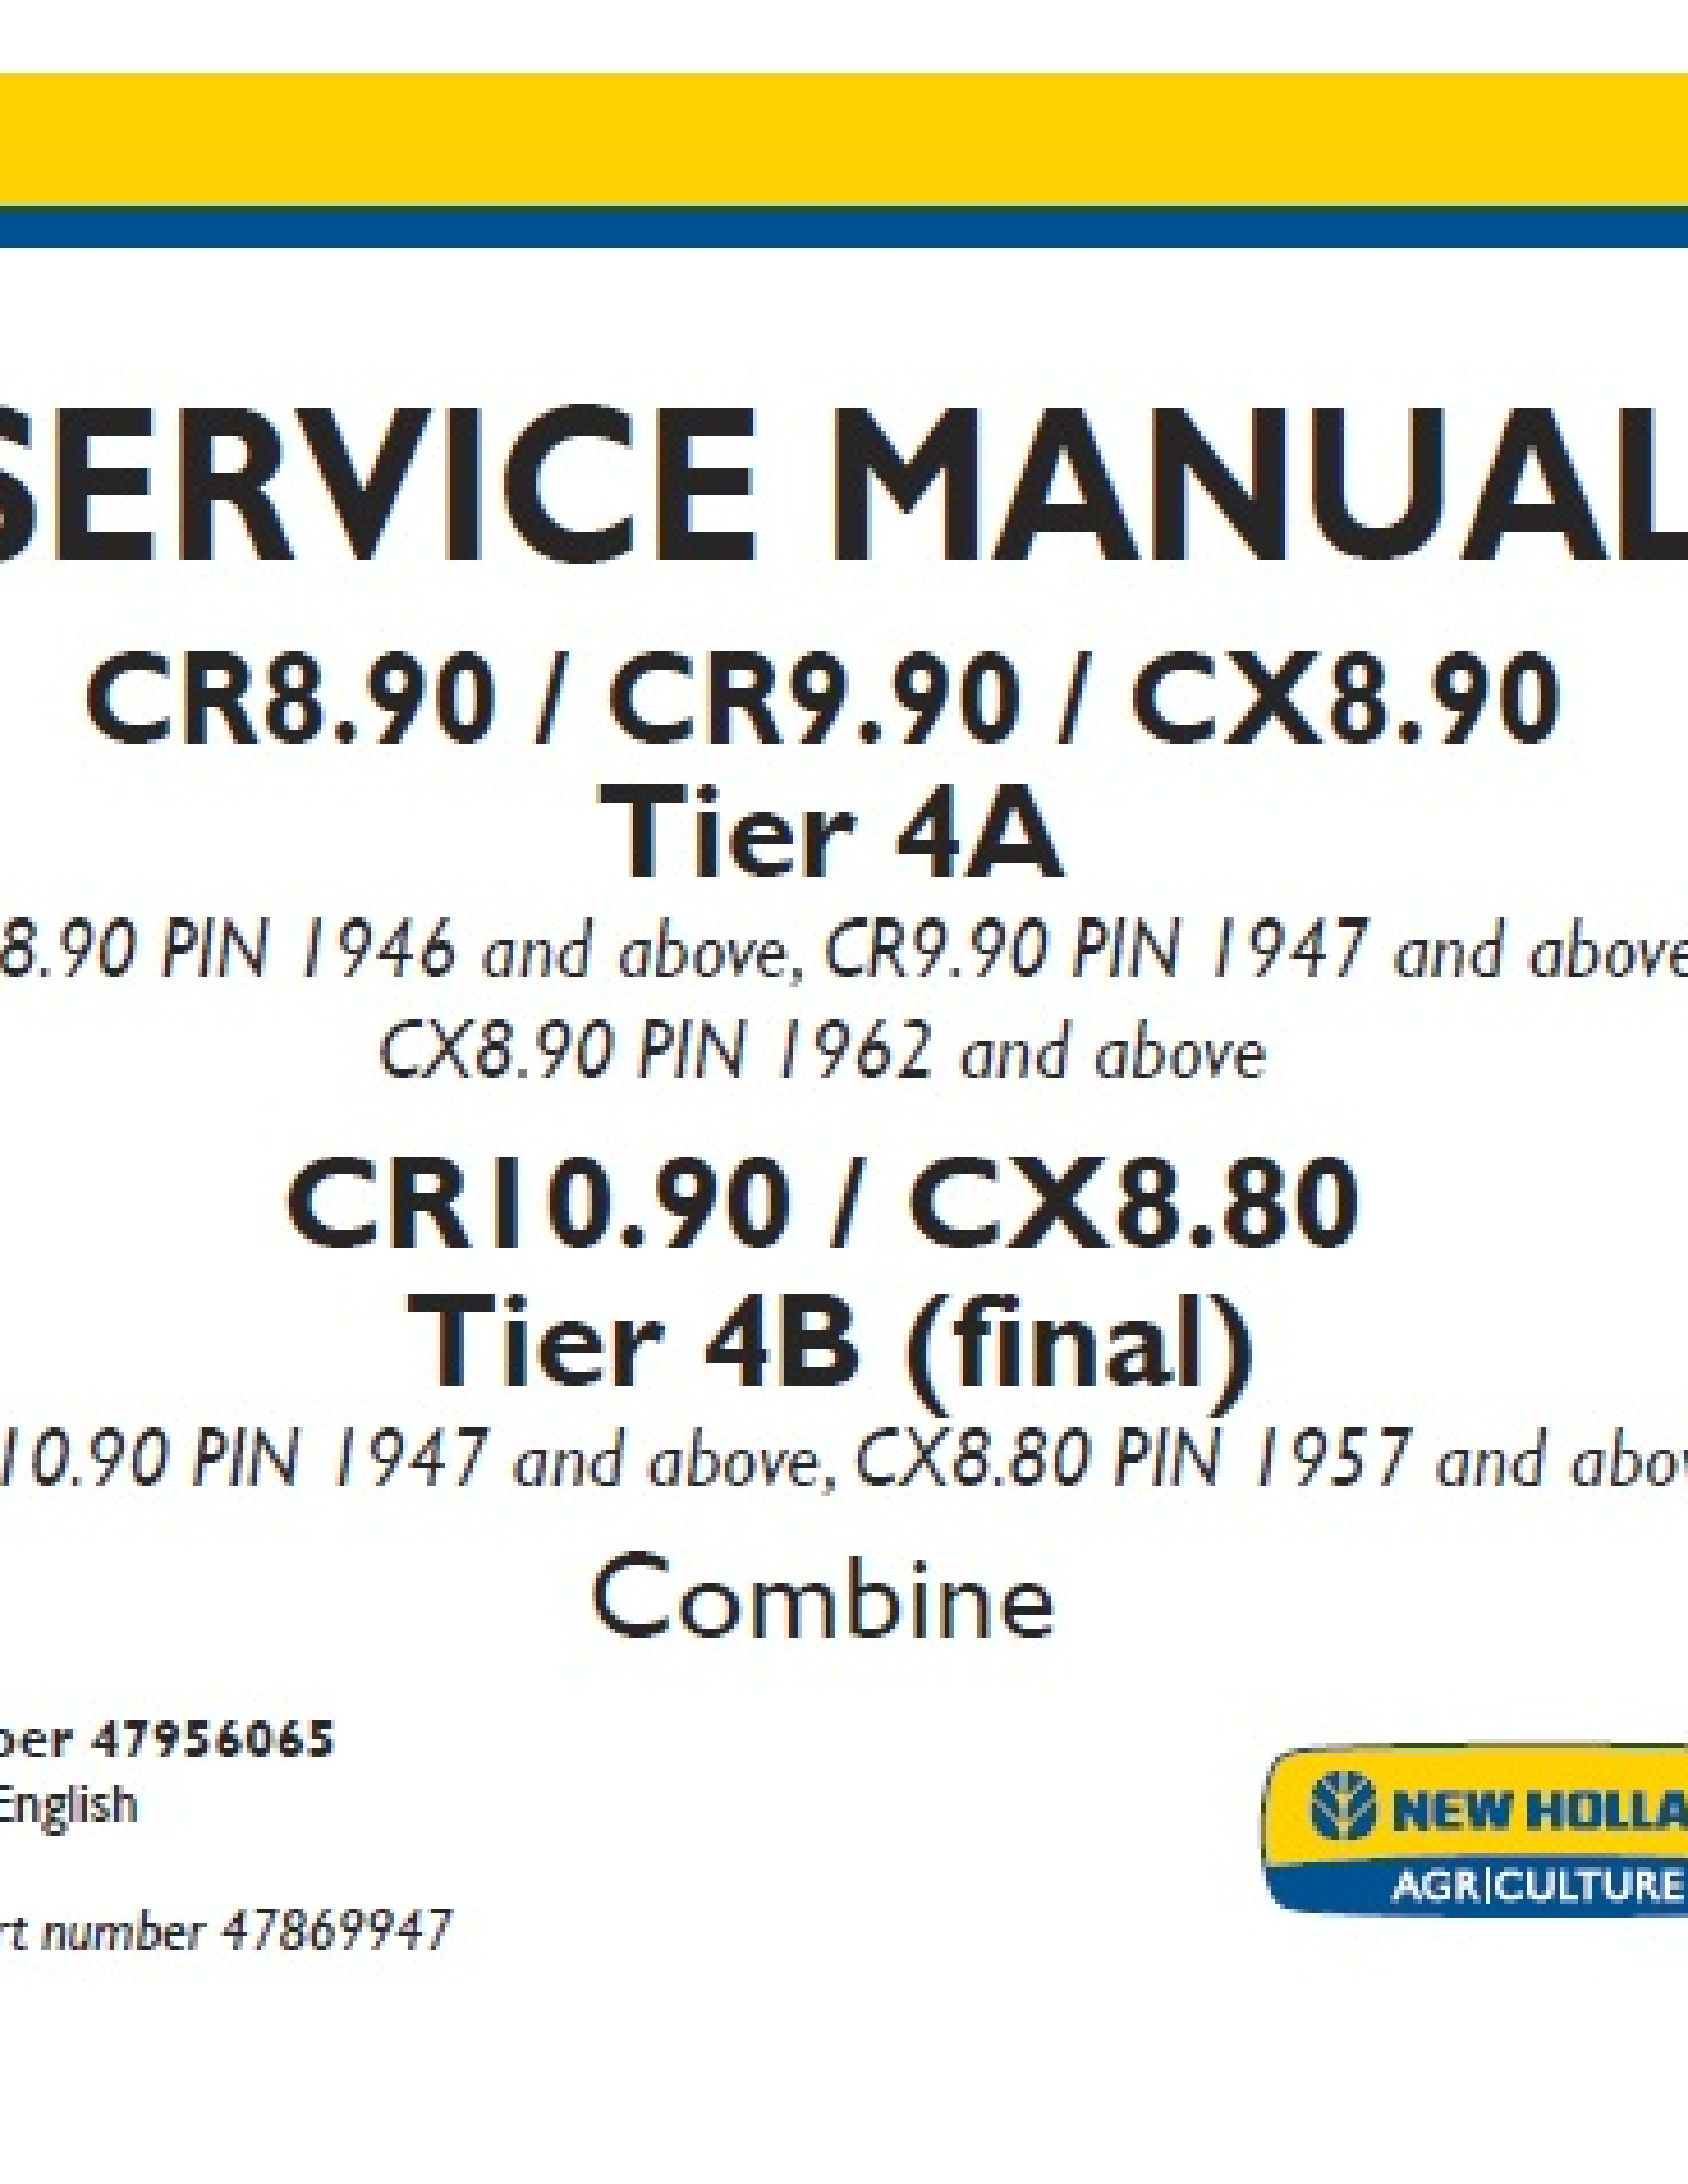 New Holland CR8.90 Tier Tier (final) Combine manual